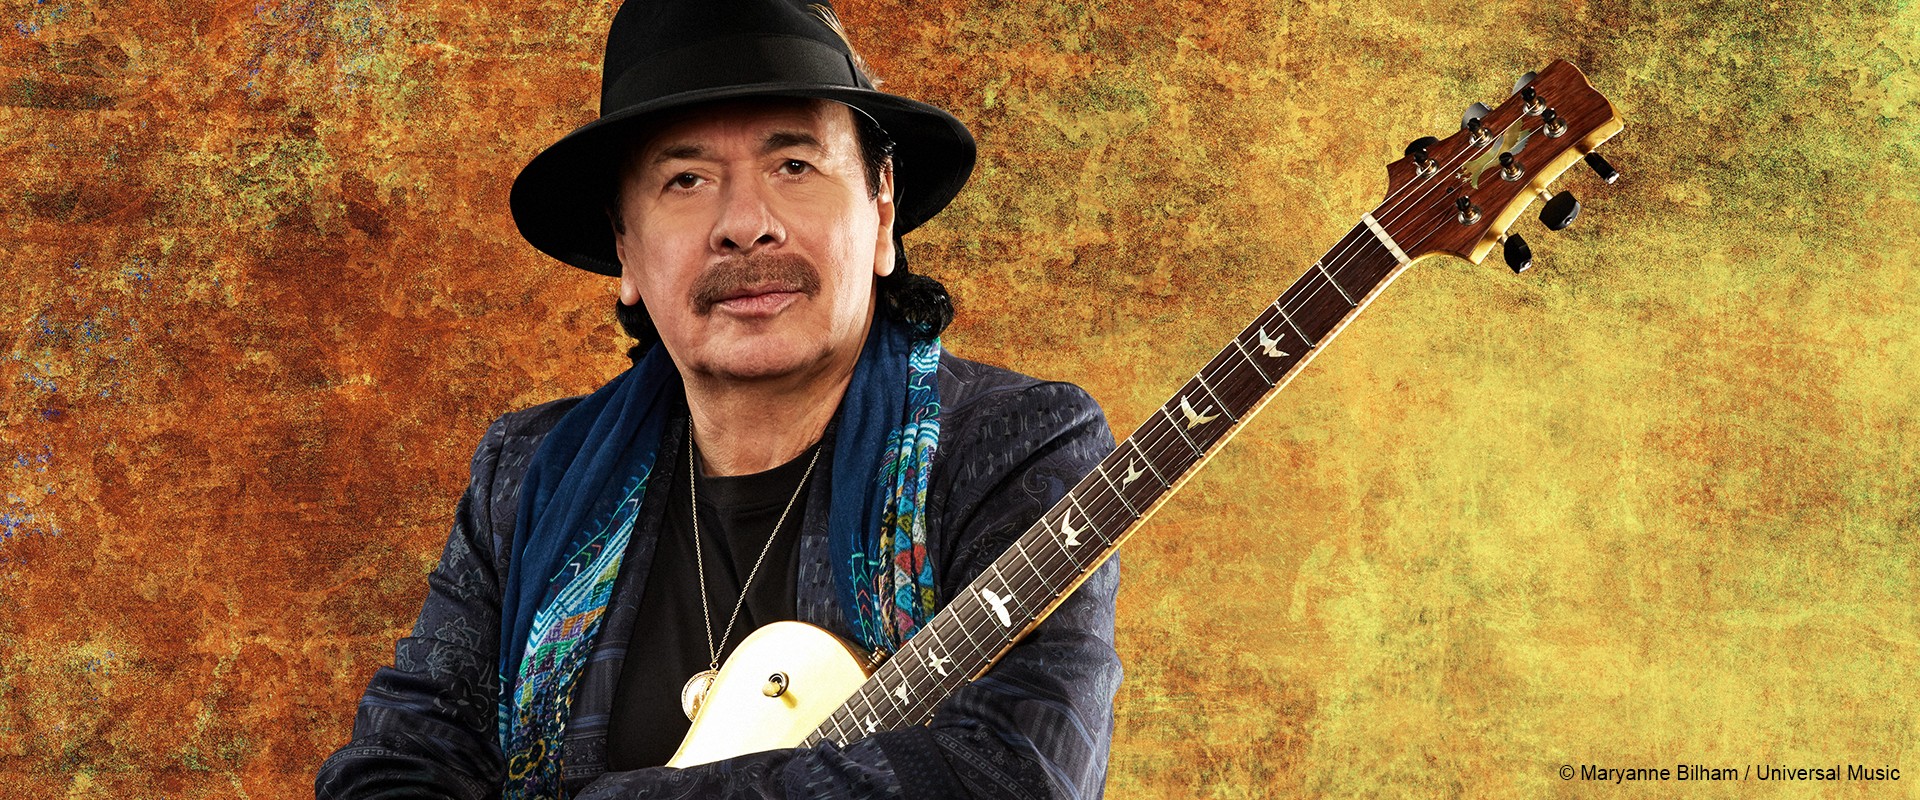 Santana koppelt Single "A Whiter Shade Of Pale" aus